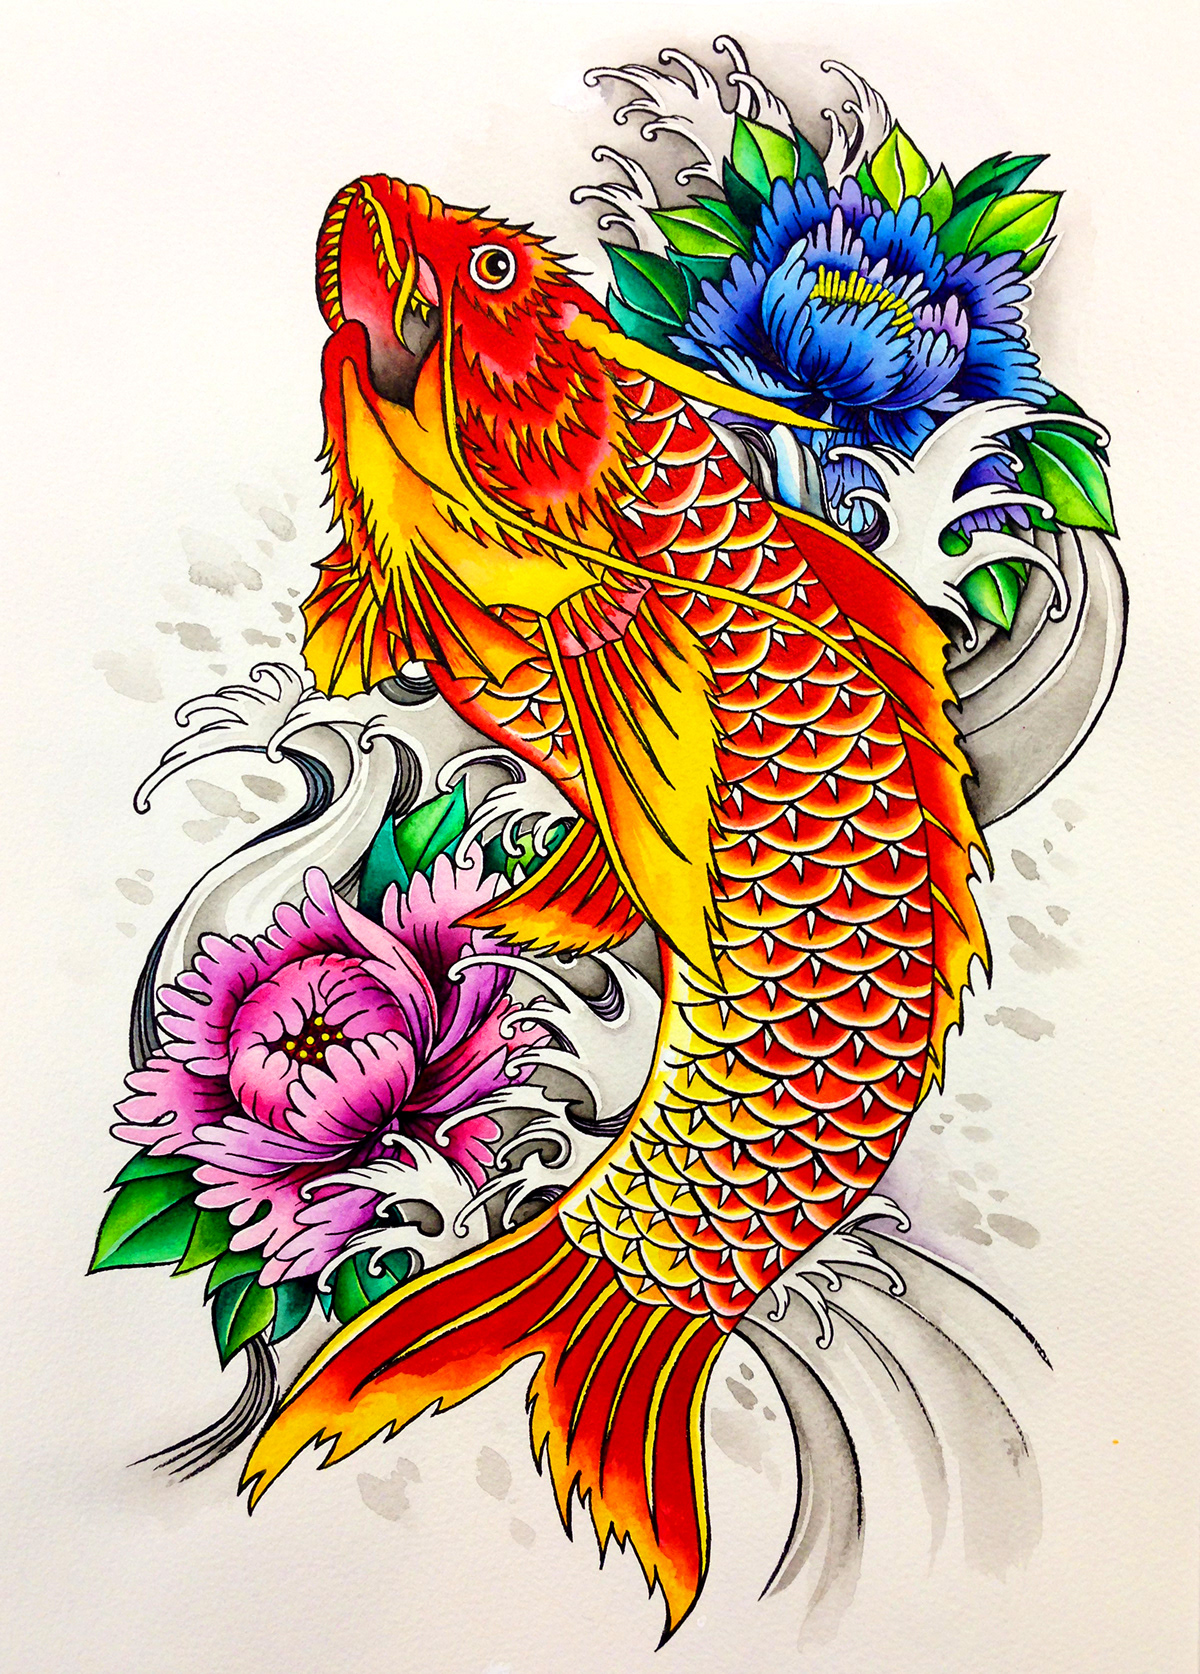 KOI FISH tattoo